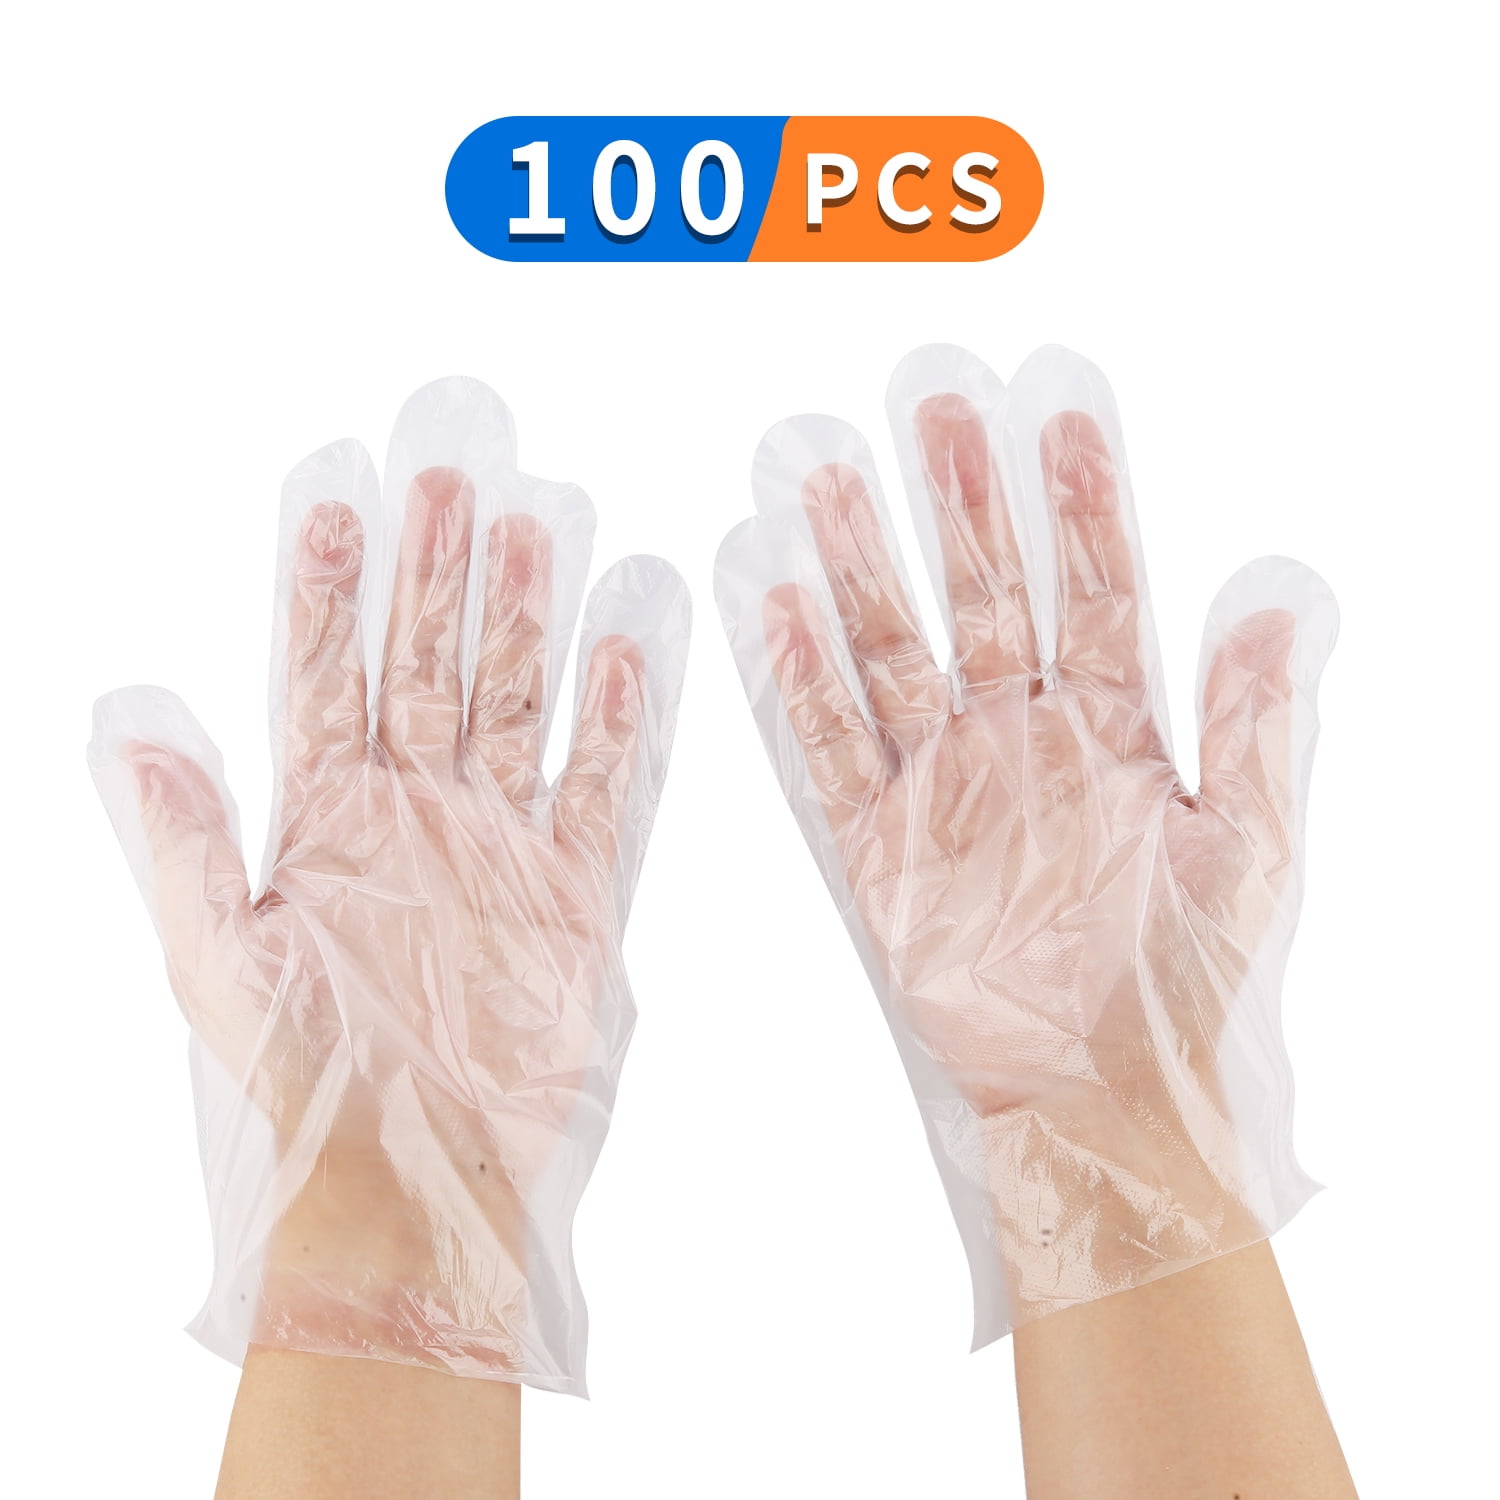 Details about   100 PCS Disposable Gloves Food Grade Dishwashing Kitchen Work Cleaning Gloves 